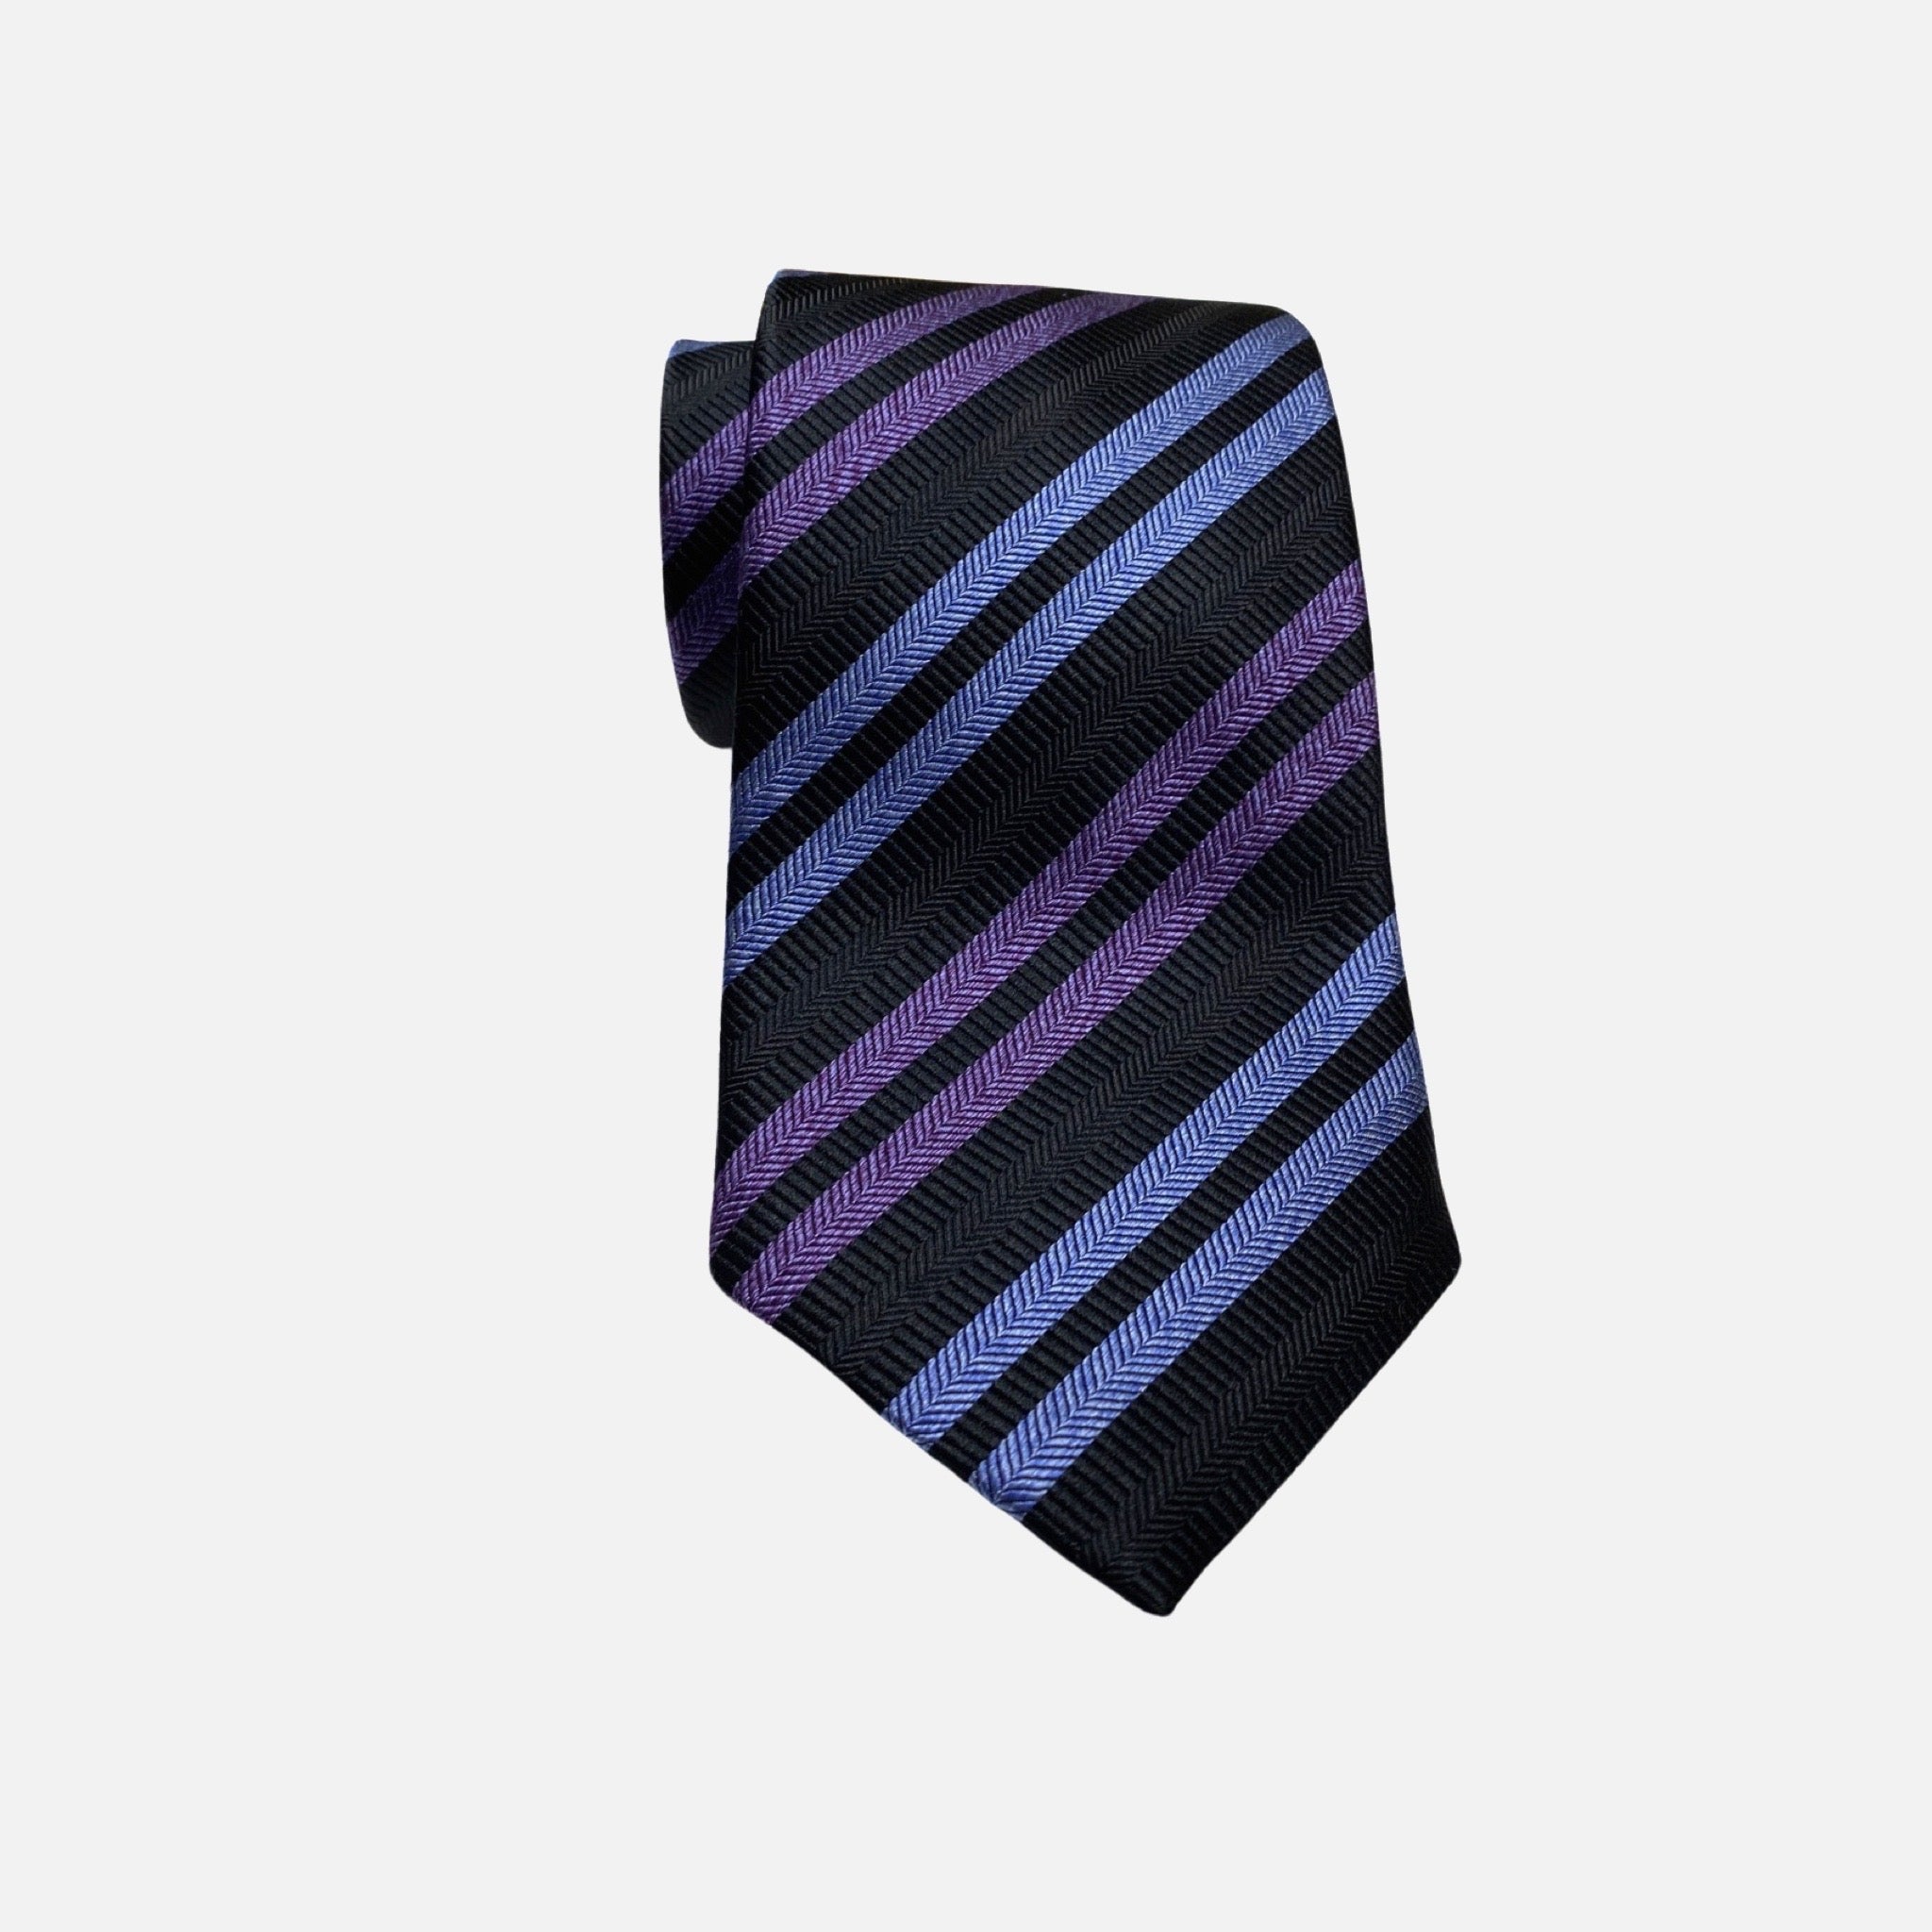 JZ Richards Black tie with diagonal blue and purple stripe